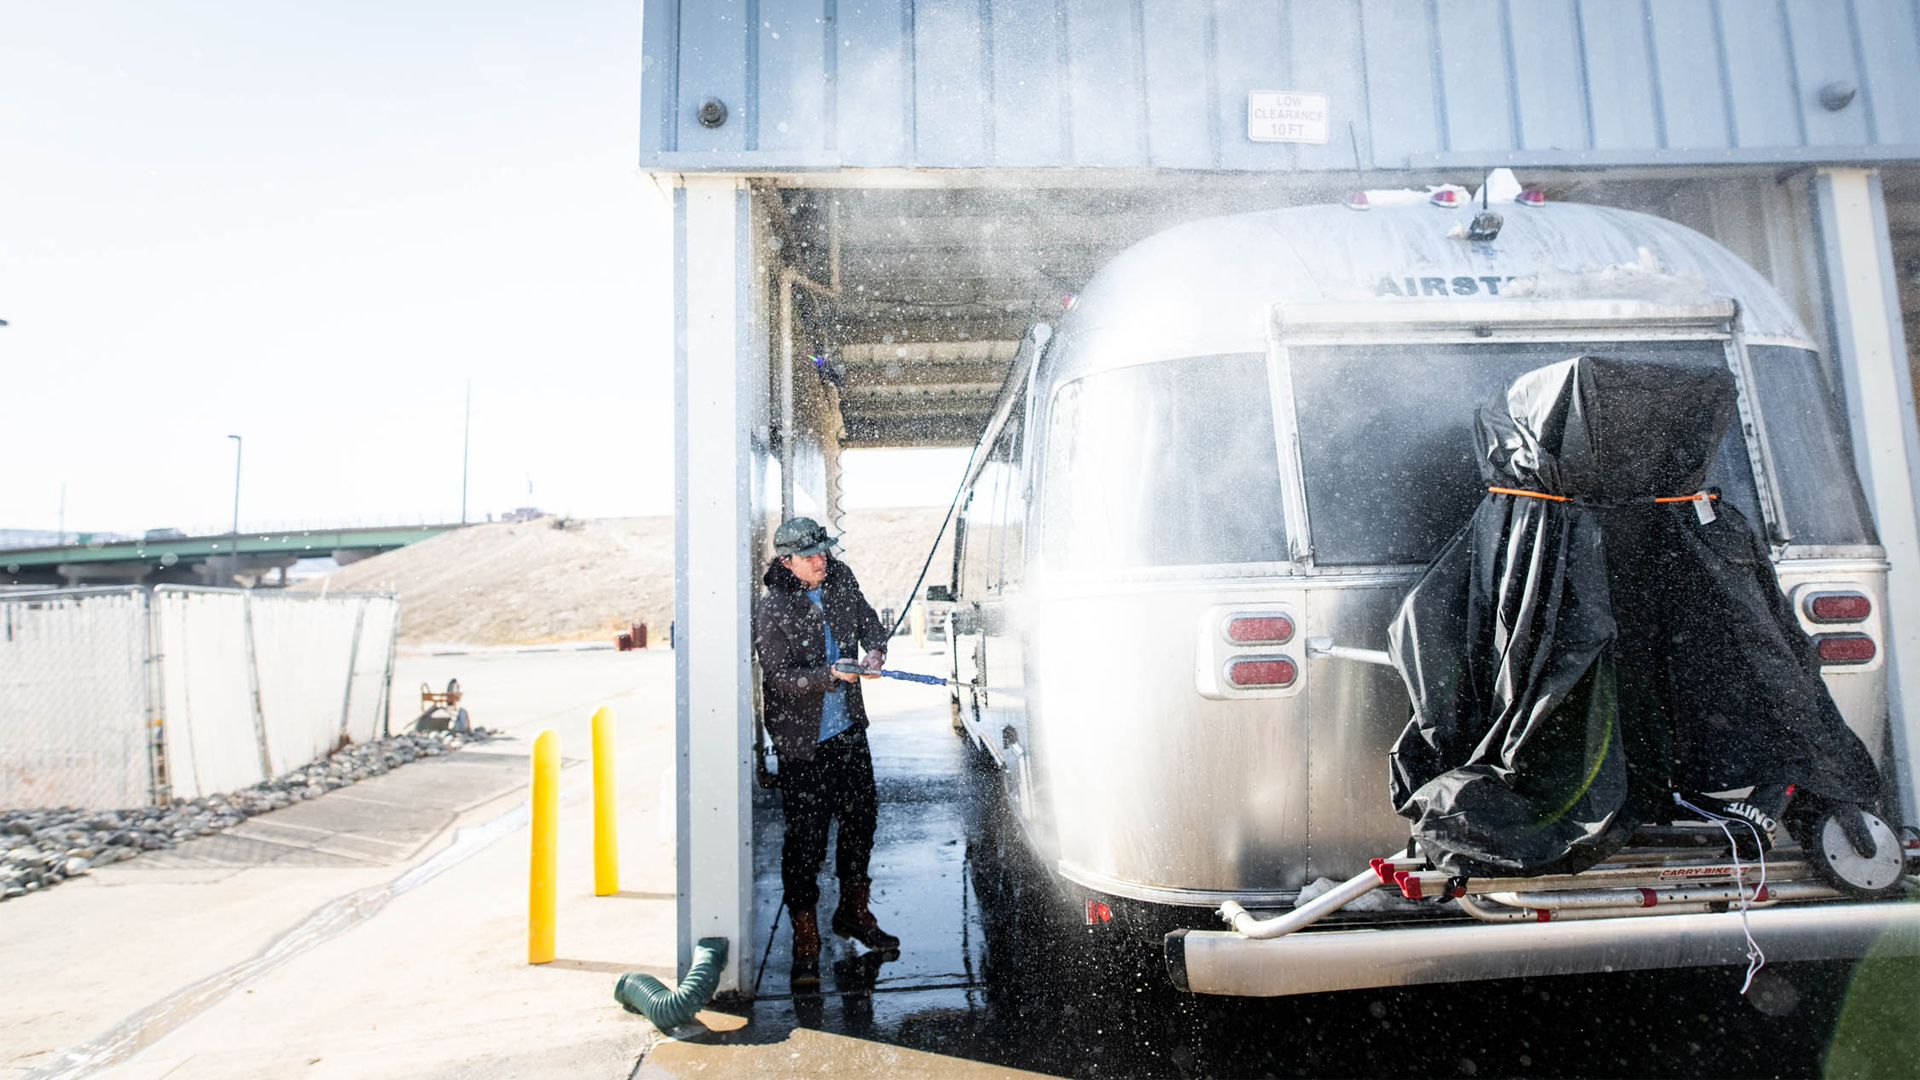 Washing off Airstream Travel Trailer